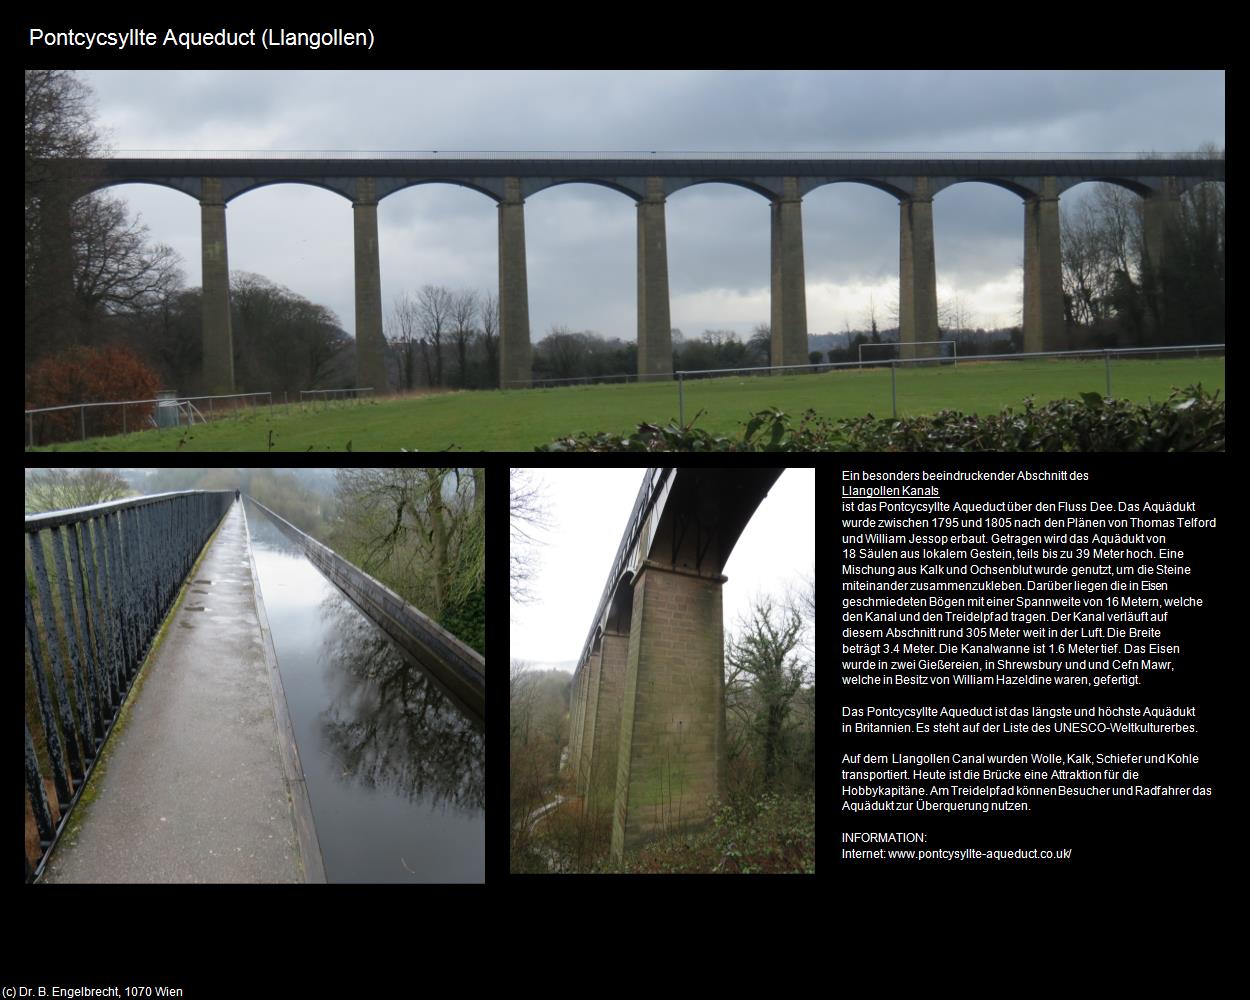 Pontcycsyllte Aqueduct  (Llangollen, Wales) in Kulturatlas-ENGLAND und WALES(c)B.Engelbrecht